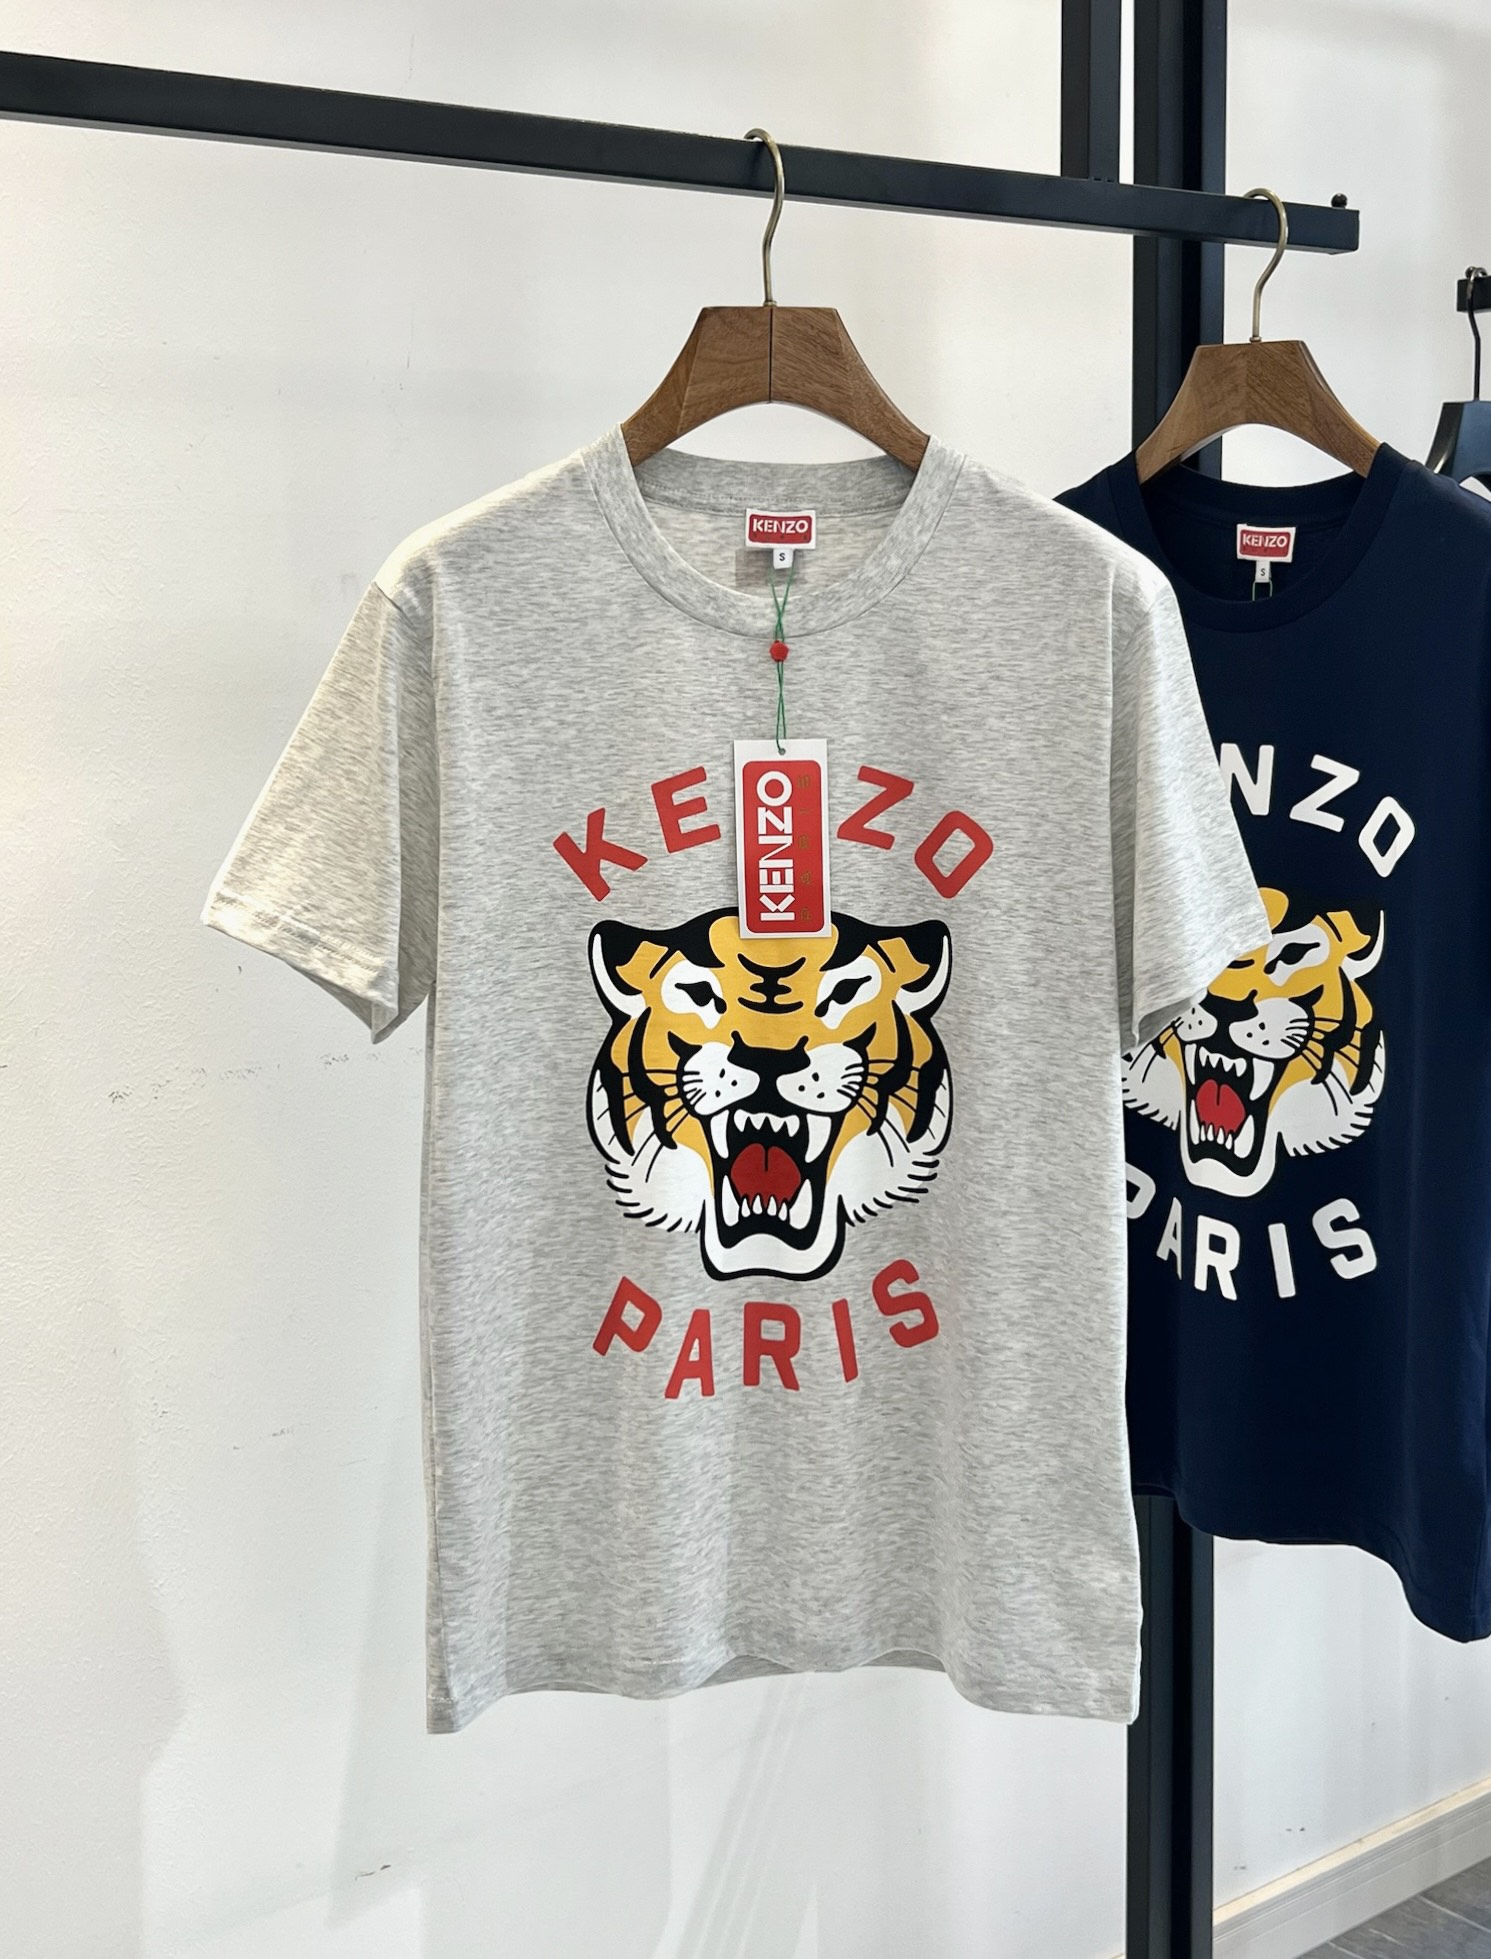 pelbydw这款T恤饰有新颖且与众不同的“KenzoLucky Tiger”图案。Nigo设计的“Lucky Tiger'”与Kenzo Takada设计的〞大象”一起，成为本品牌的标志性吉祥物。这个中性款式采用了现代宽松版型。入春第一步 感受T恤的酷 ！这一波Kenzo新版虎头真是一季比一季好看 T恤除了看版型 图案更吸睛大标oversize 印花T 无性别穿搭体恤 女生直接配 leggings一件无烦恼搭配 搞个情侣装穿穿也不错！8lzdyls0010